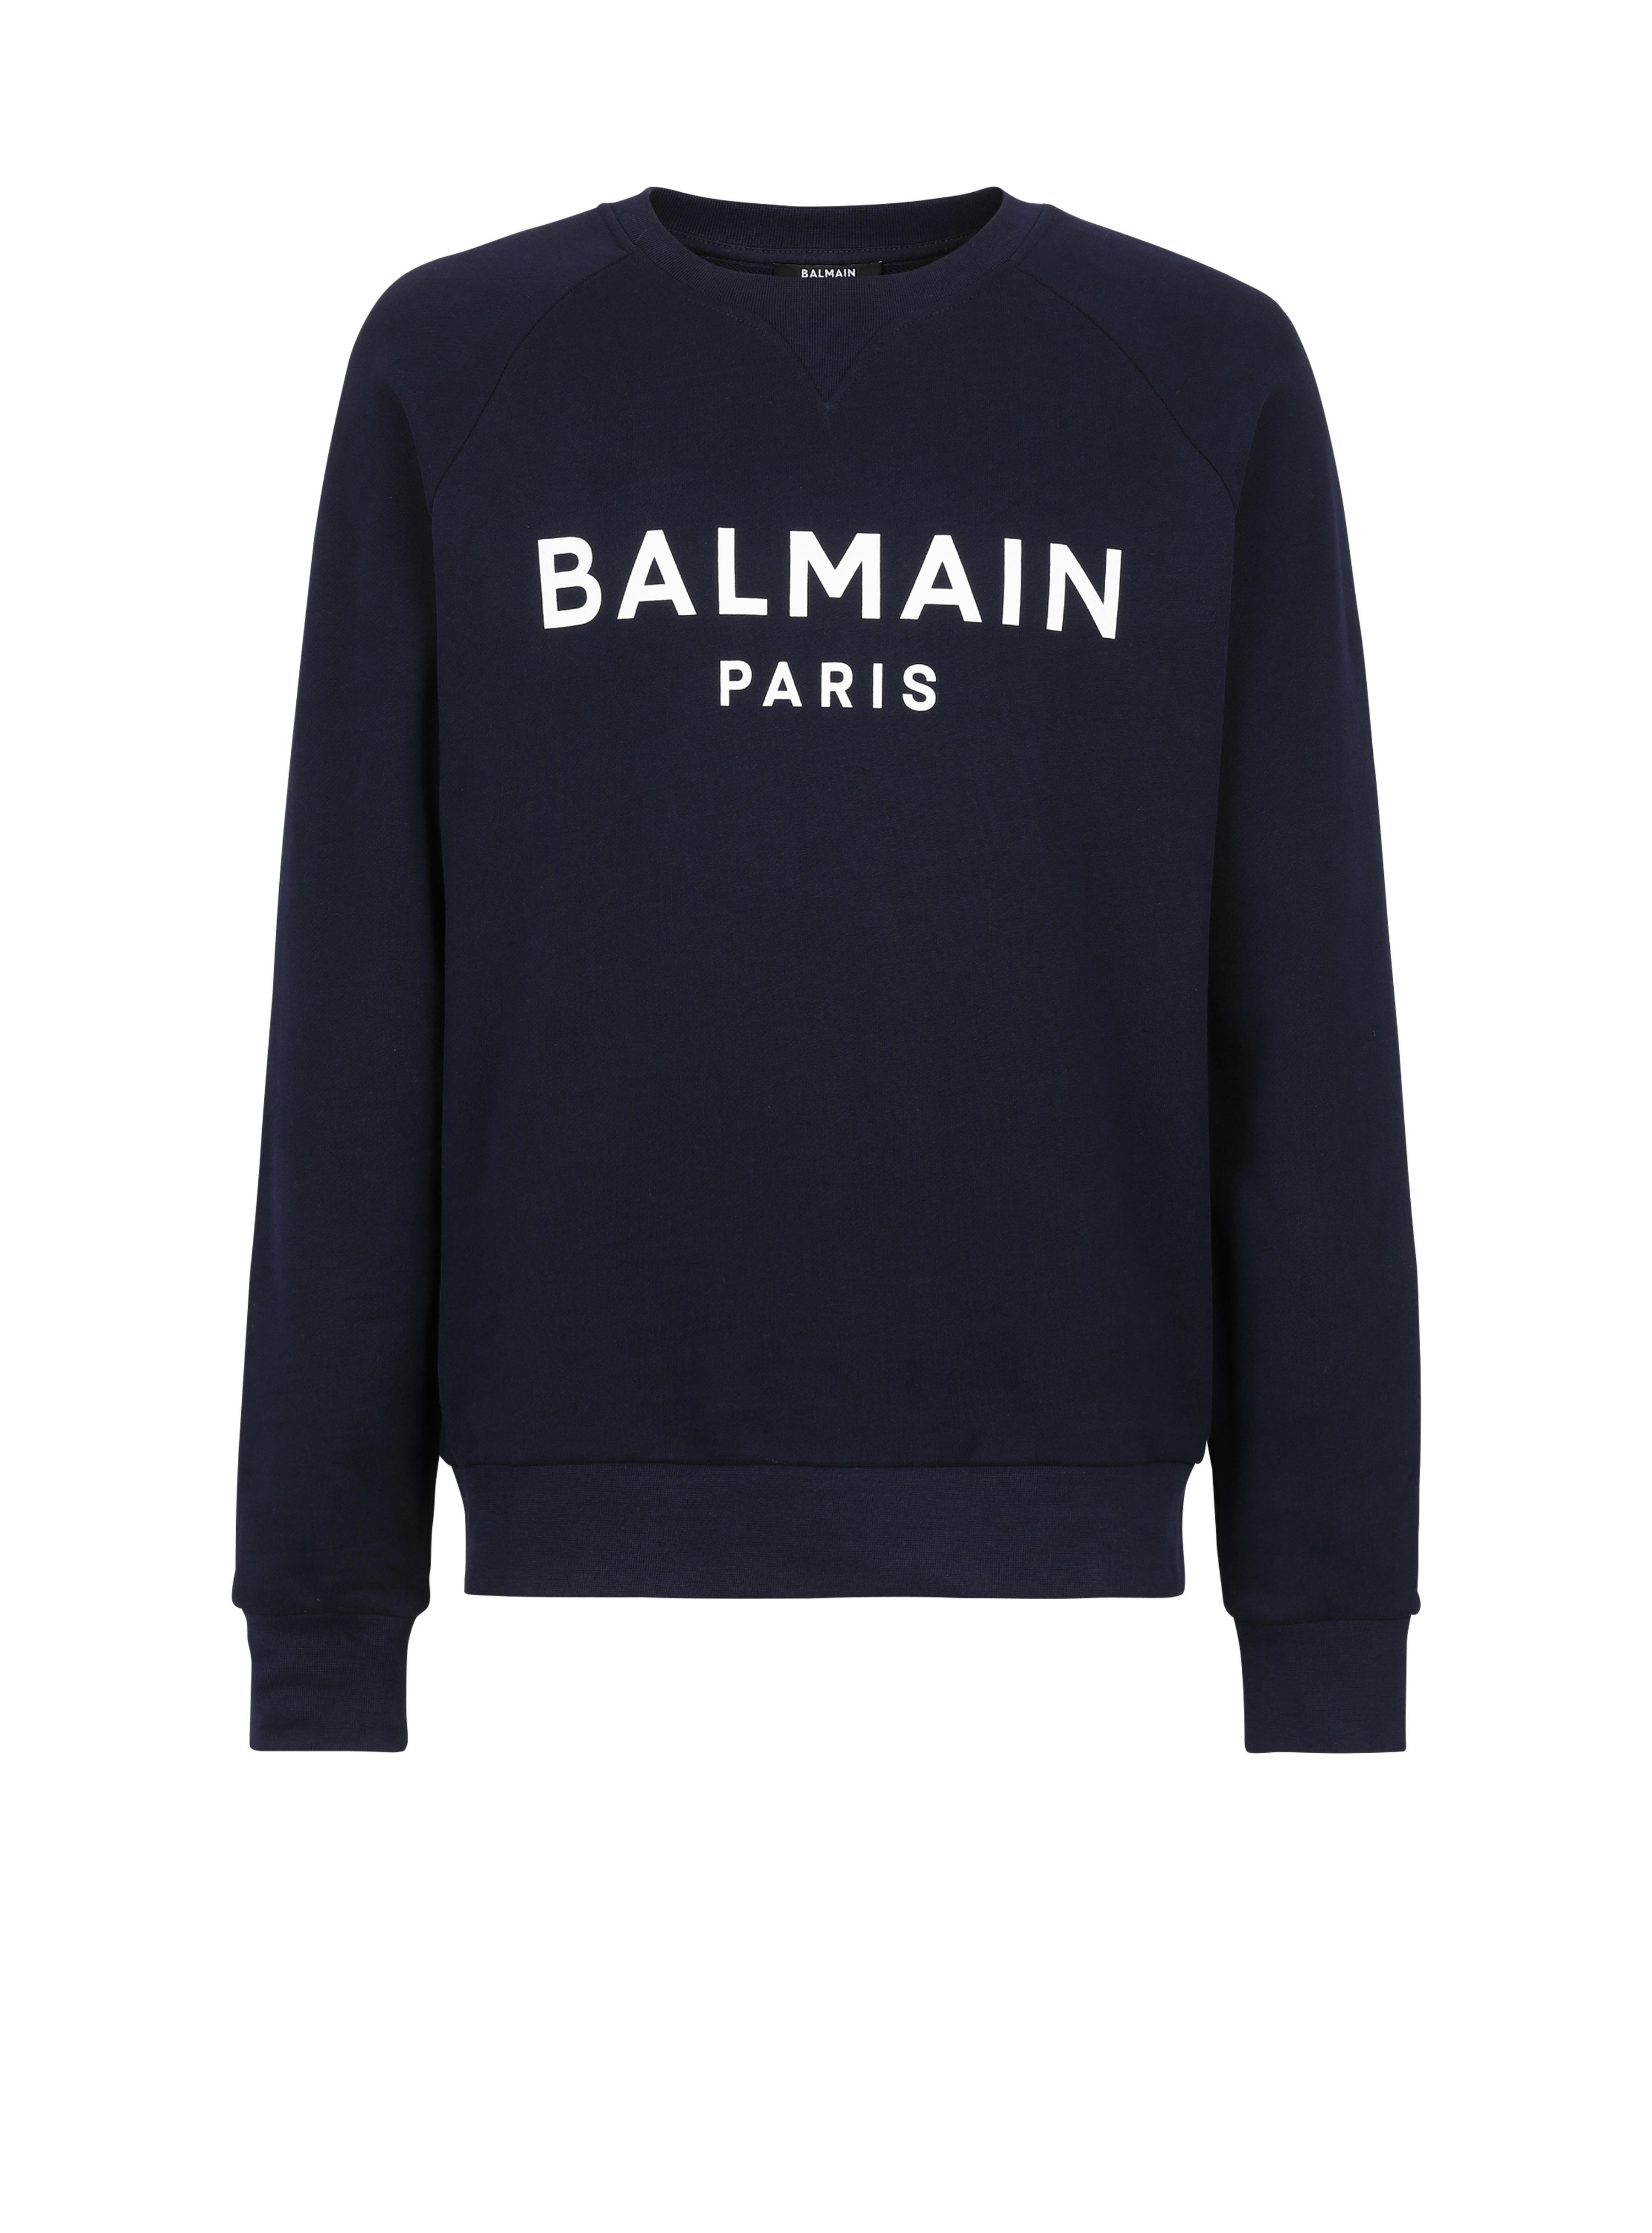 Cotton sweatshirt with flocked Balmain Paris logo, navy